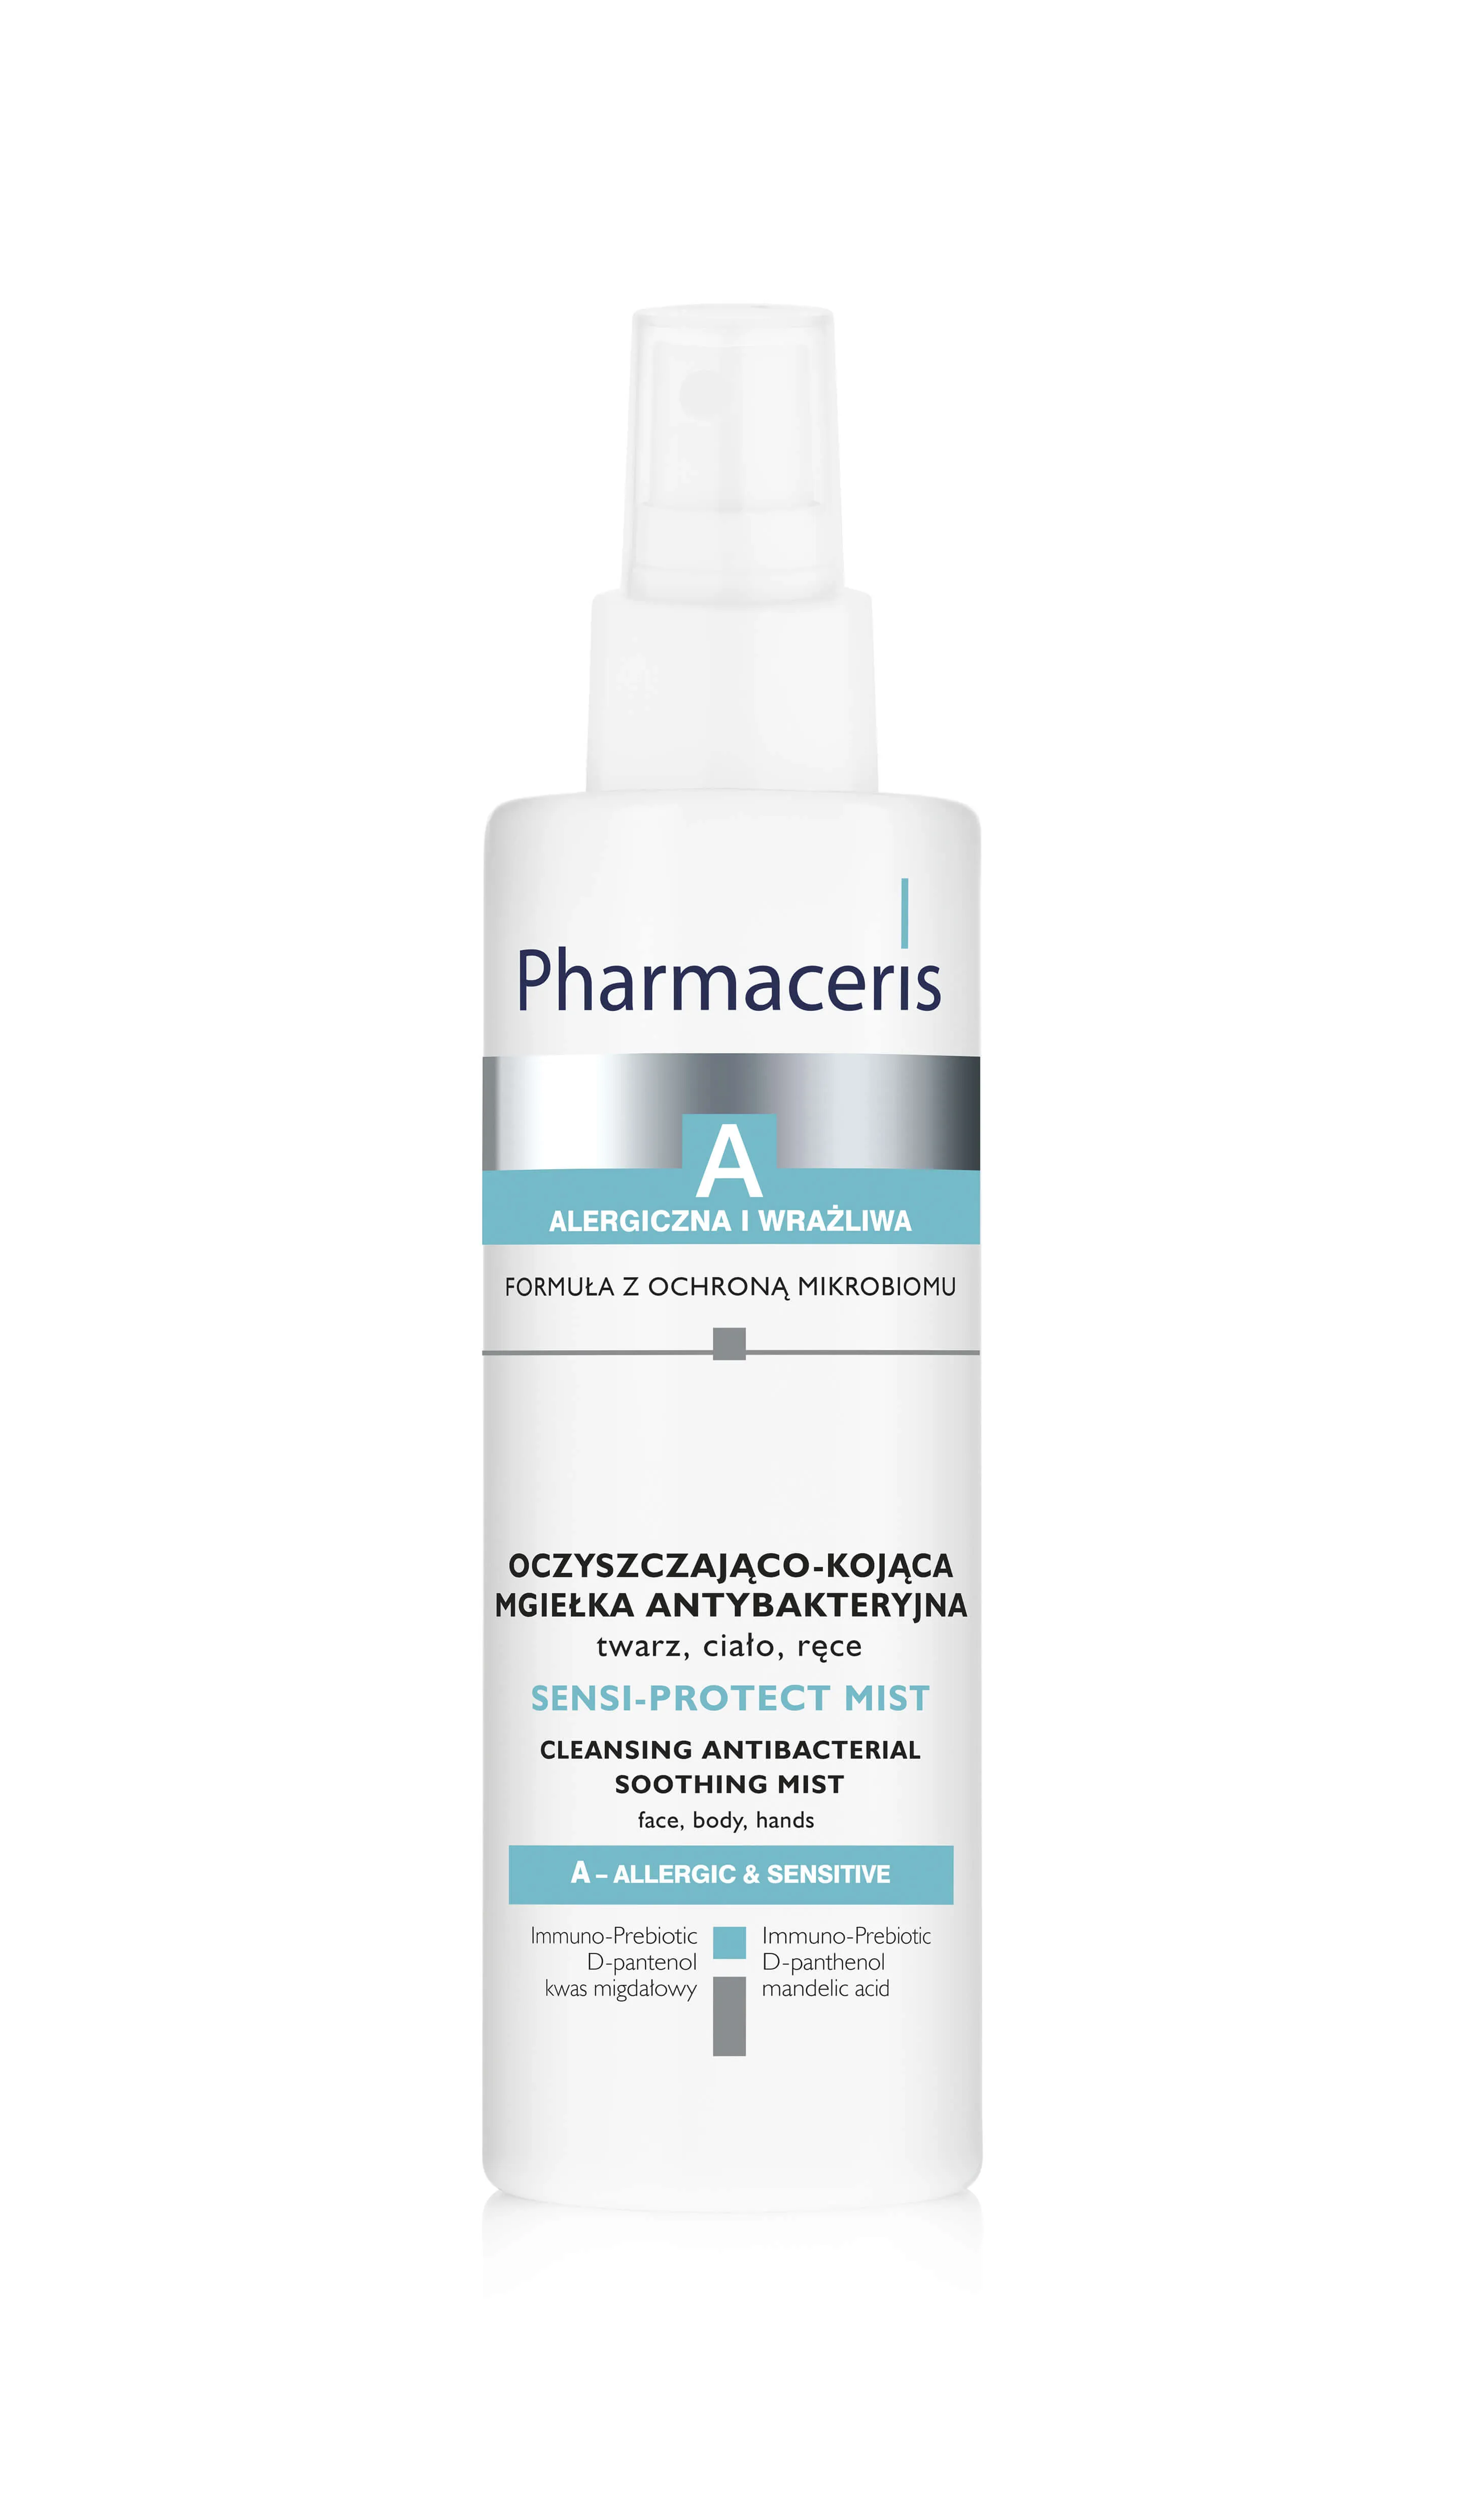 Pharmaceris A Sensi-Protect Mist, mgiełka antybakteryjna, 100 ml